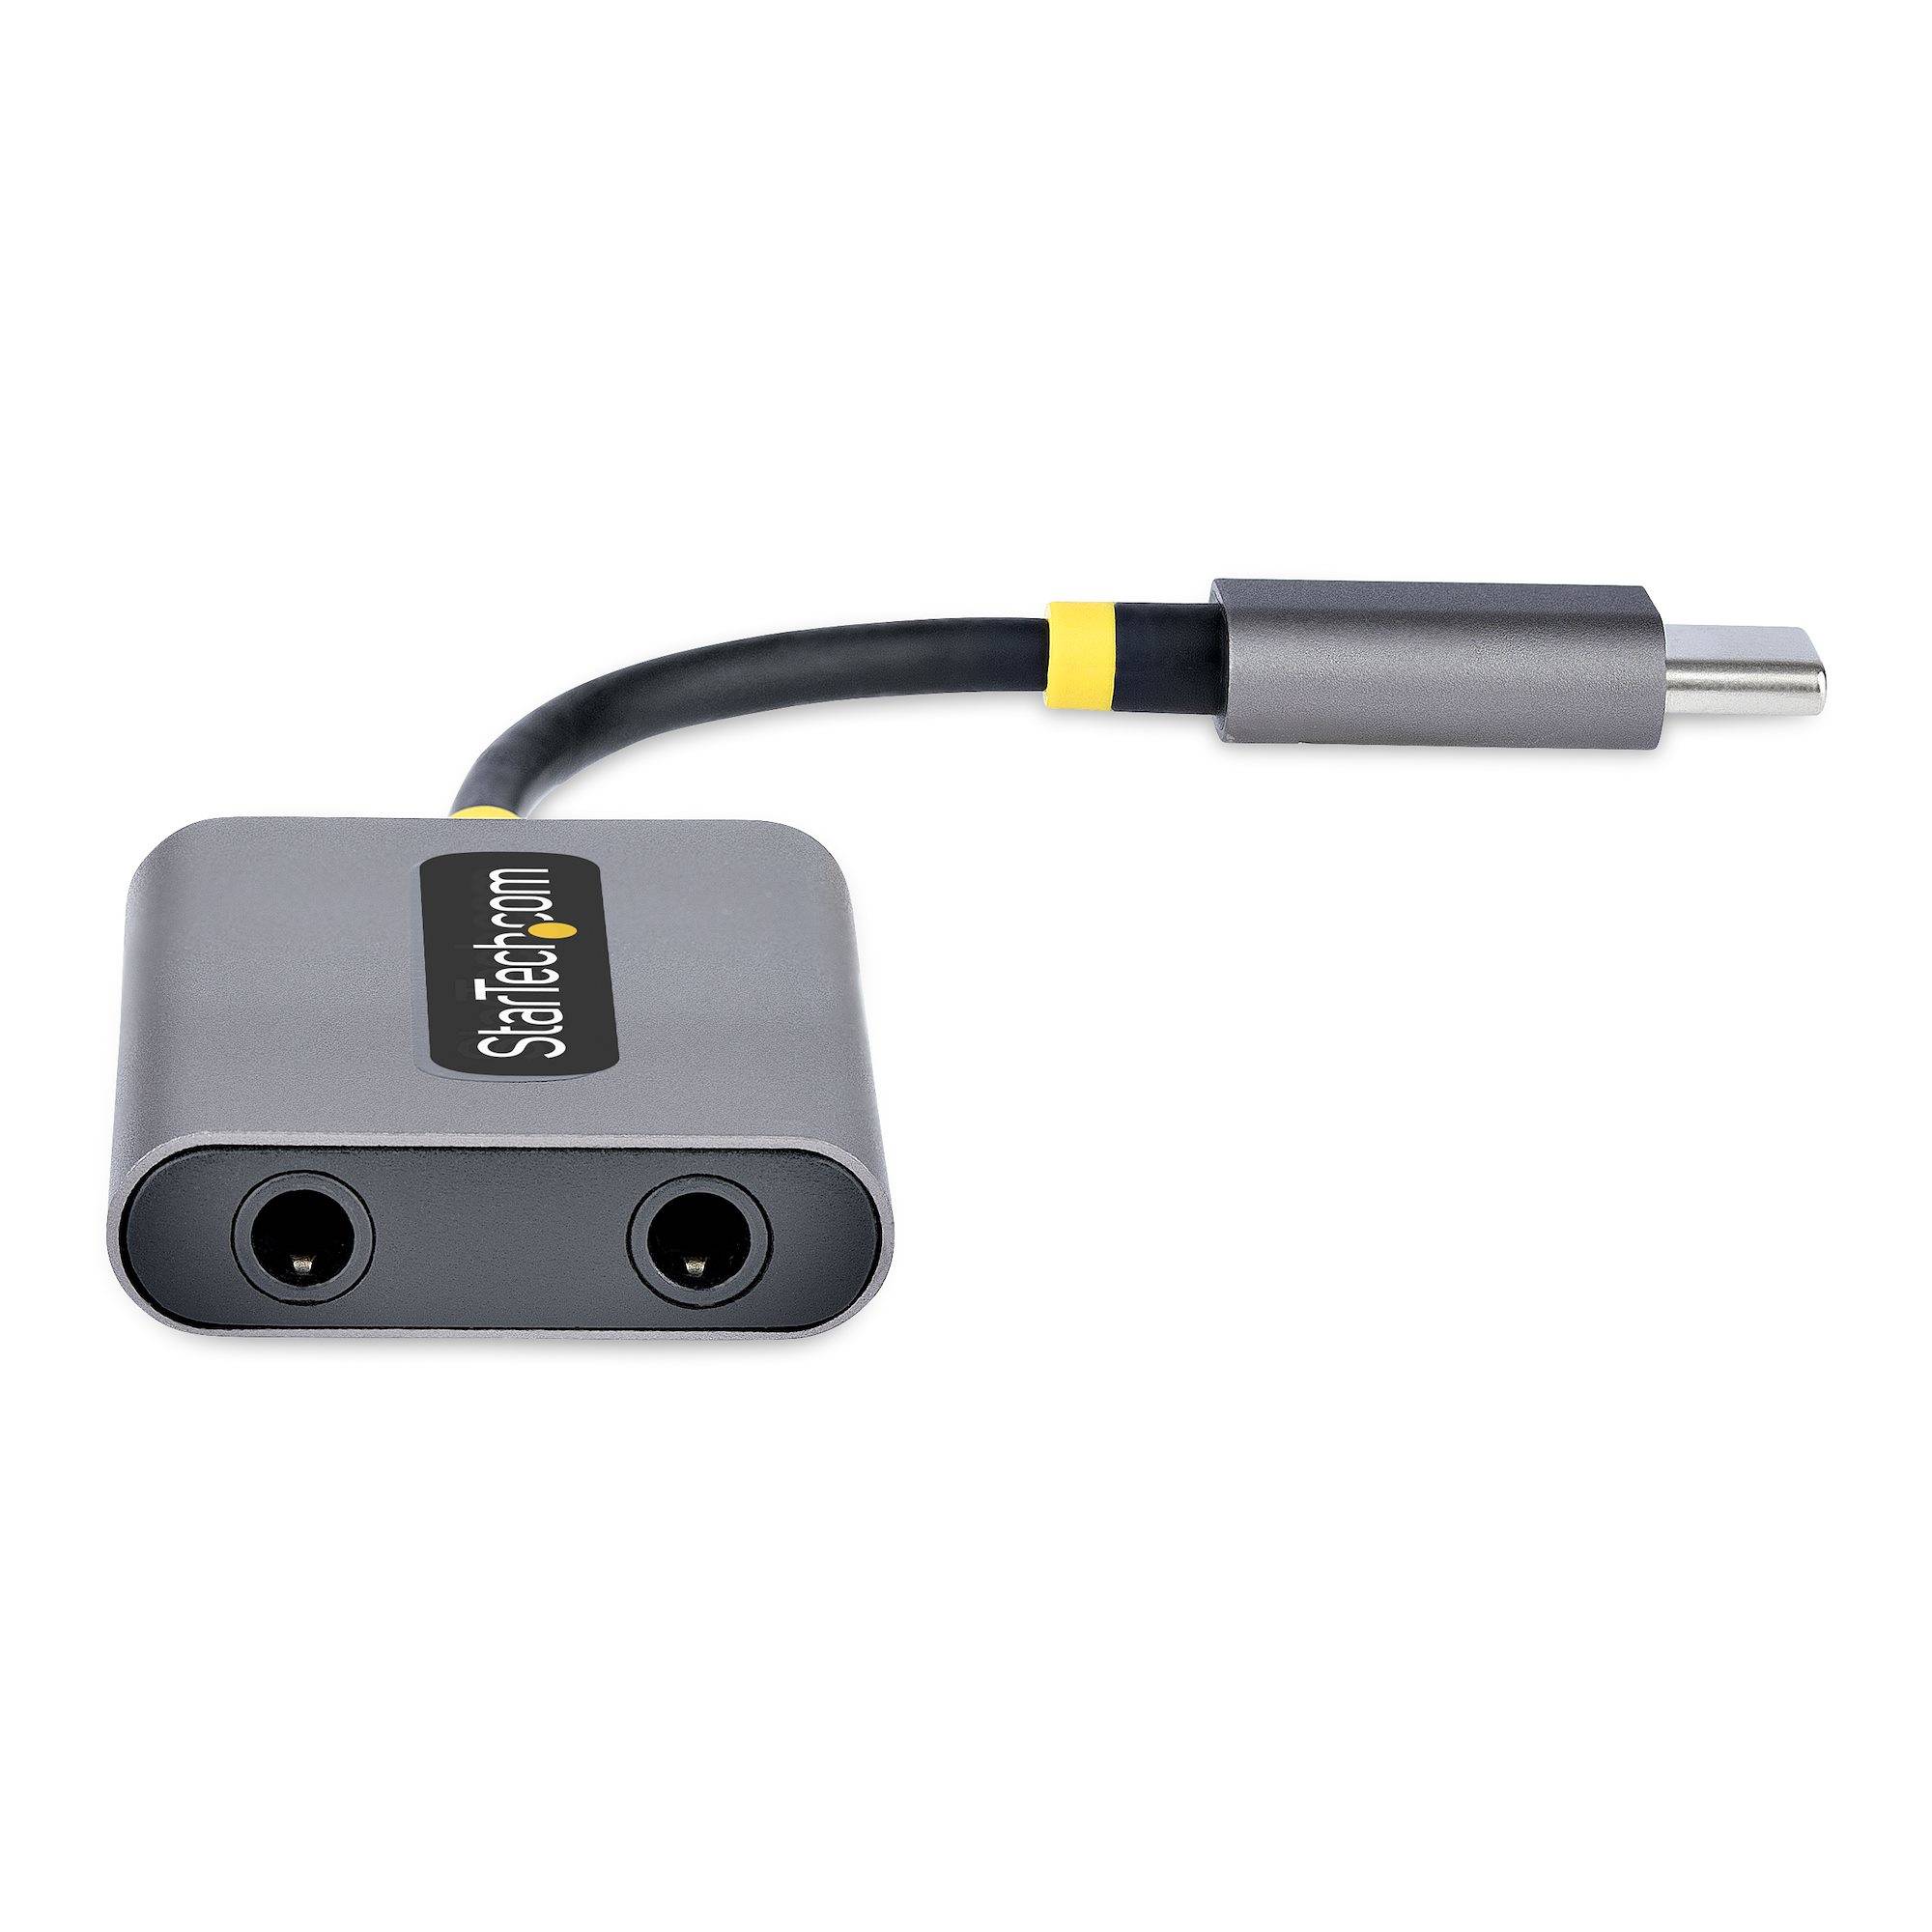 Rca Informatique - image du produit : USB-C HEADPHONE SPLITTER - USB C TO DUAL 3.5MM AUDIO ADAPTER